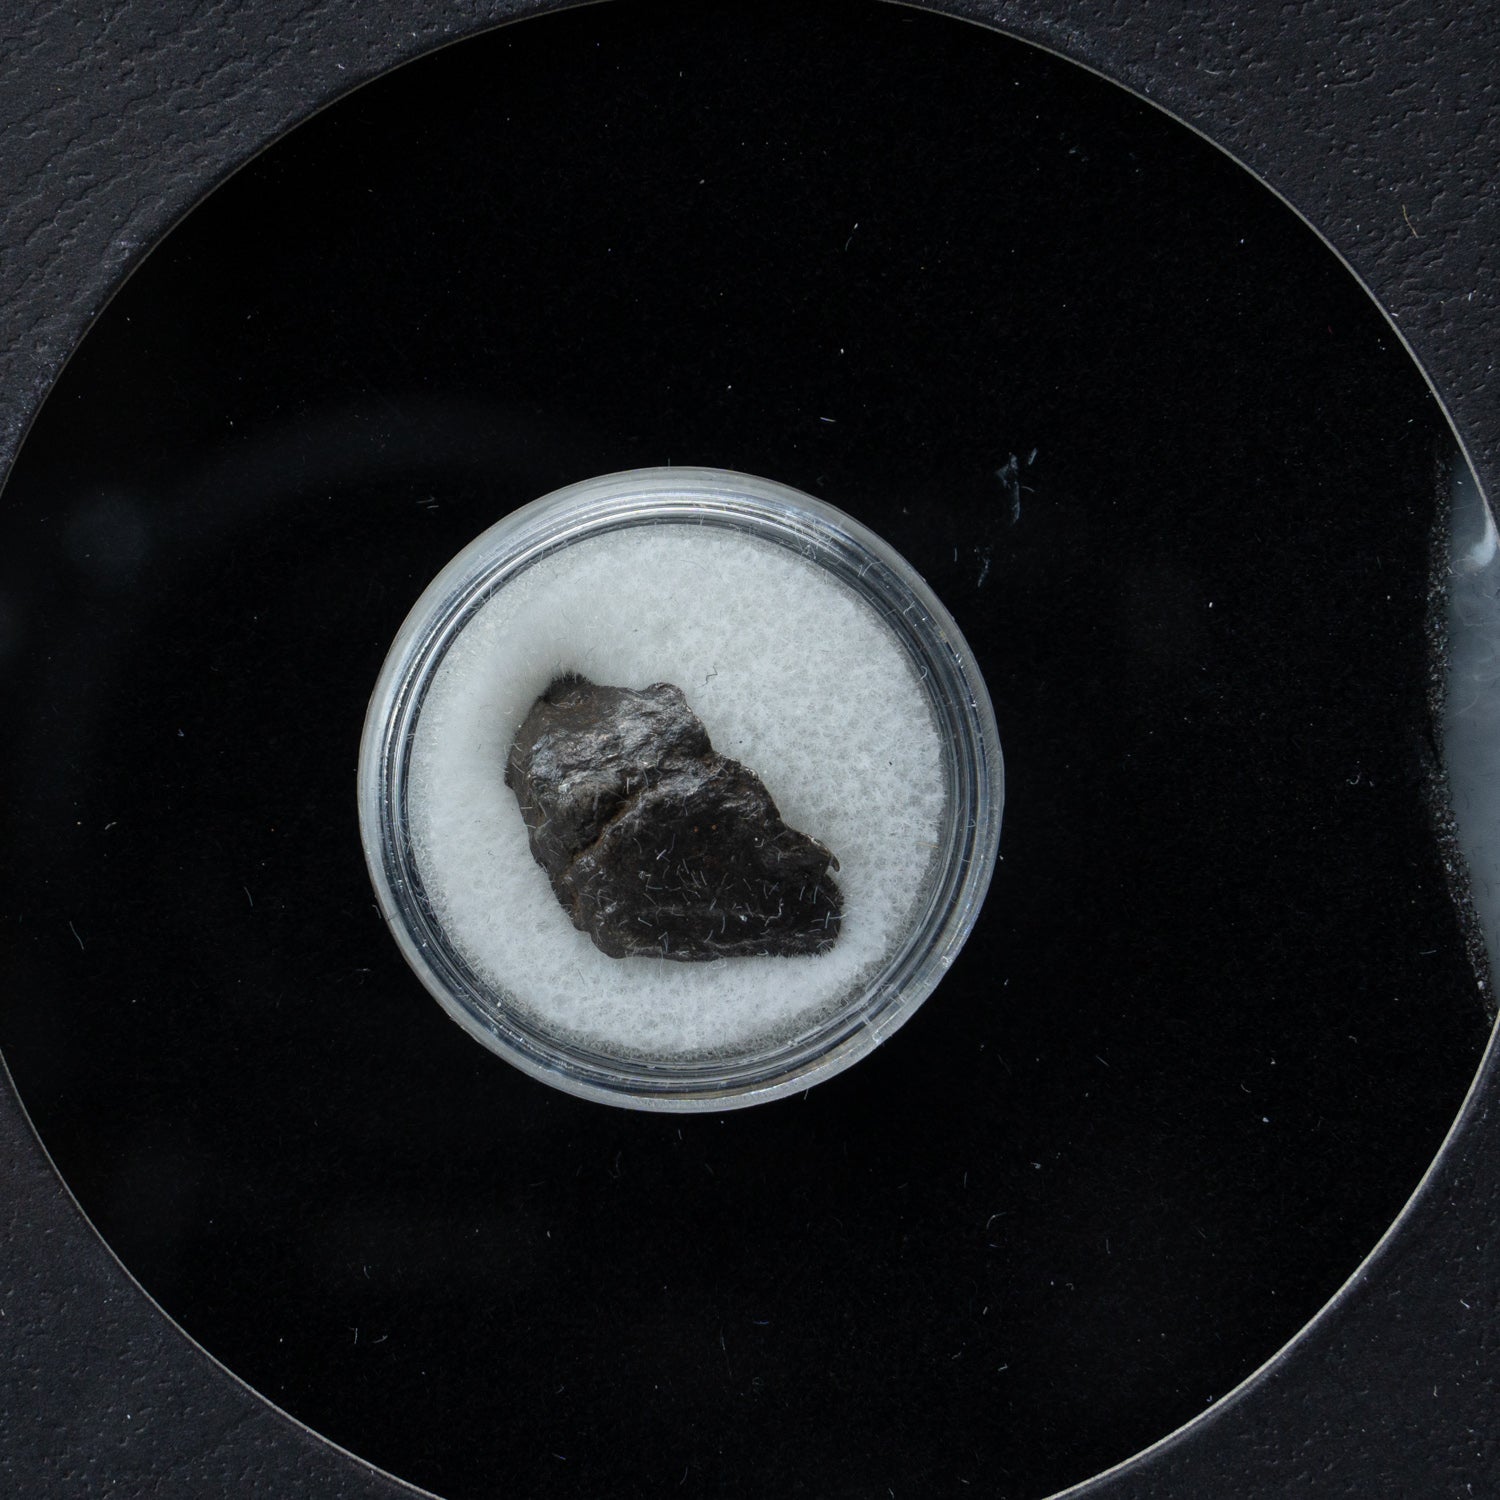 Genuine Sikhote-Alin Meteorite from Russia in Glass Display Box